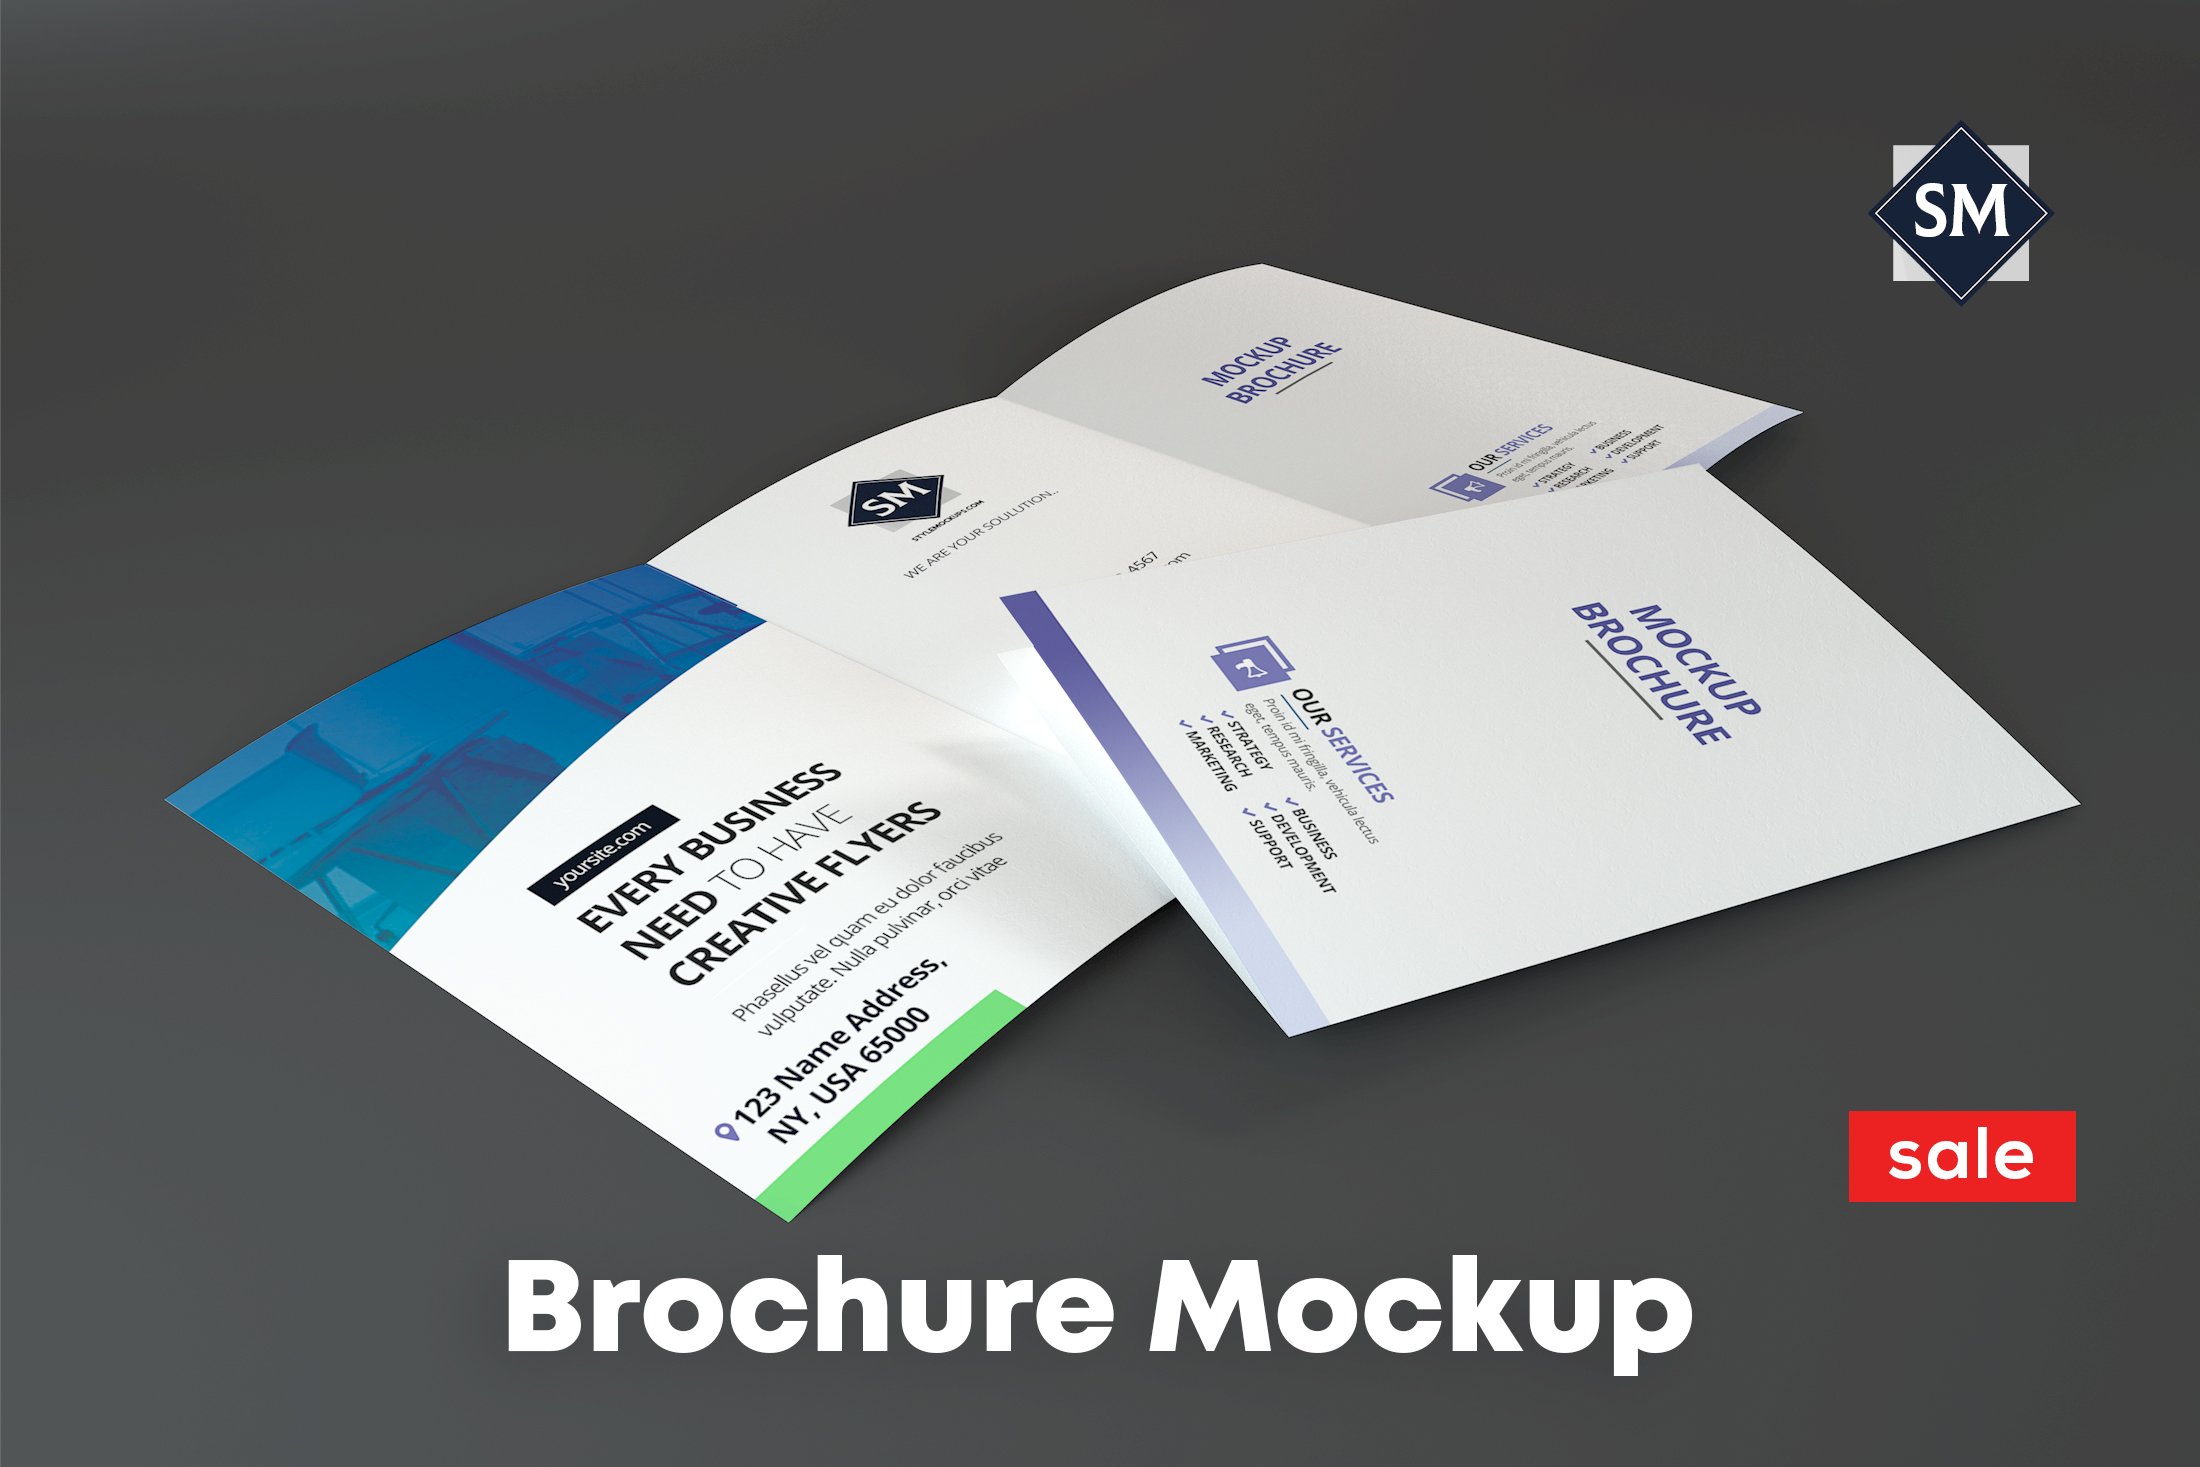 A4 Tri-Fold Brochure Mockup Vol2 cover image.